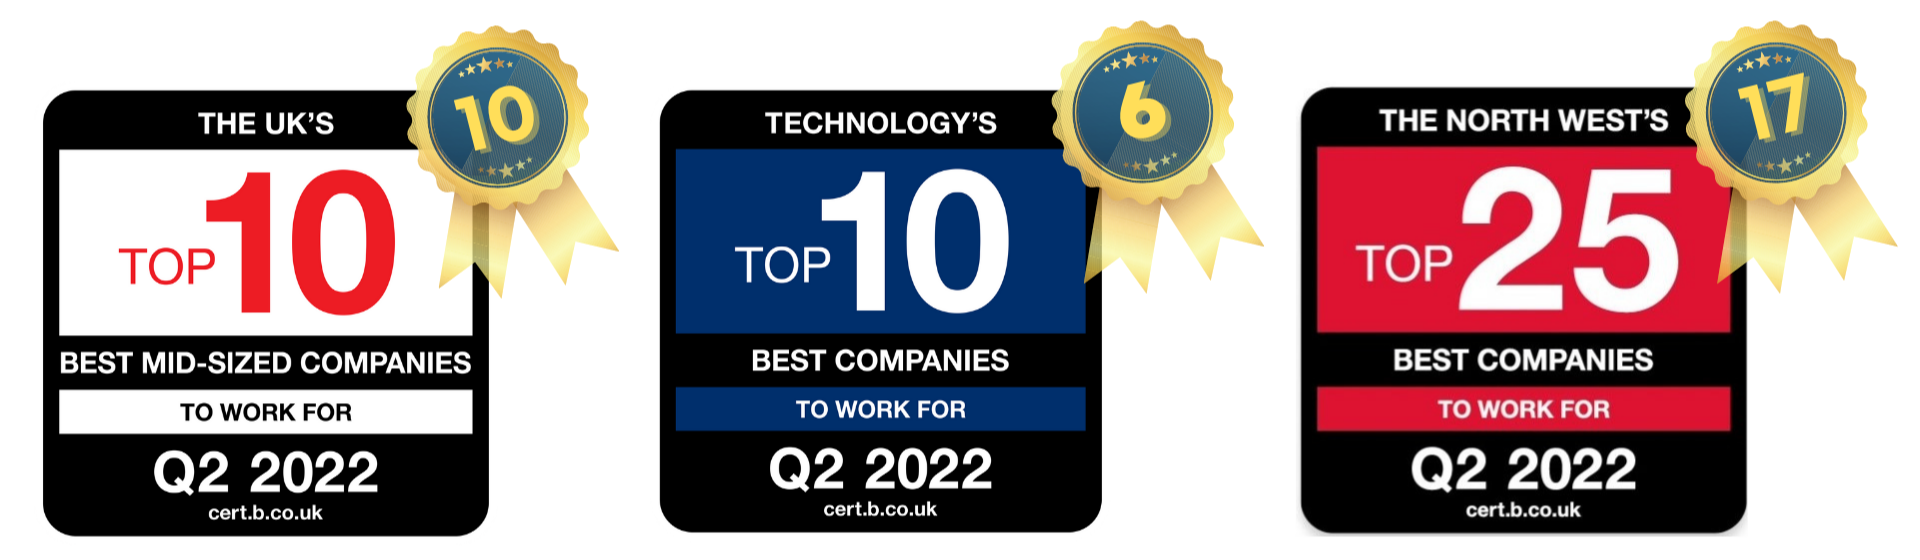 Best Companies 2022 Banner 4-2-1